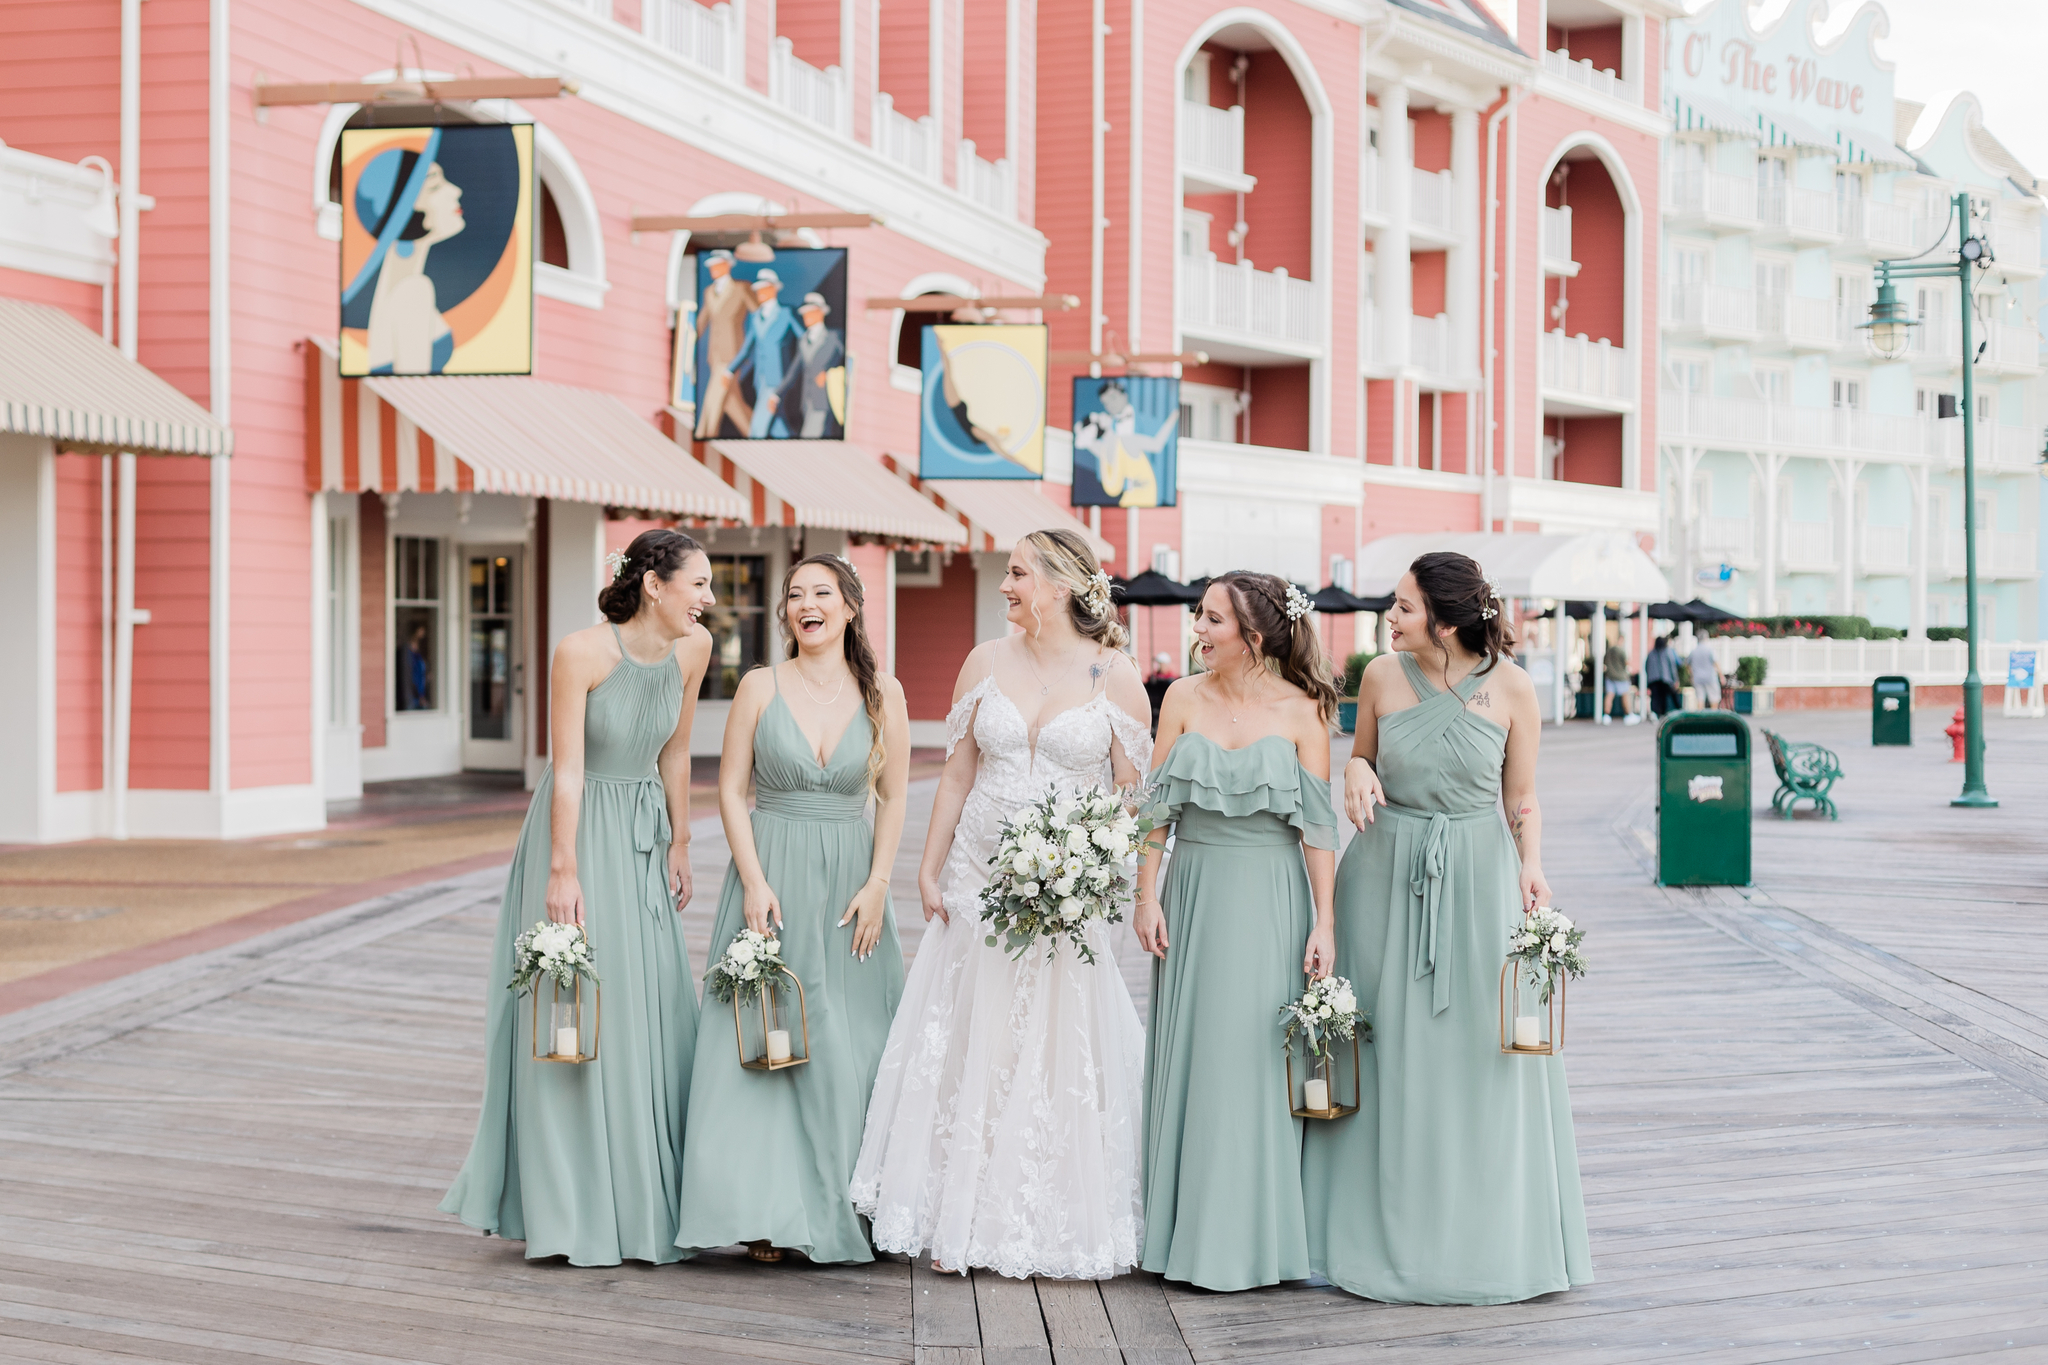 Oak manor law, port Orleans riverside Disney Wedding photos by Jess Collins